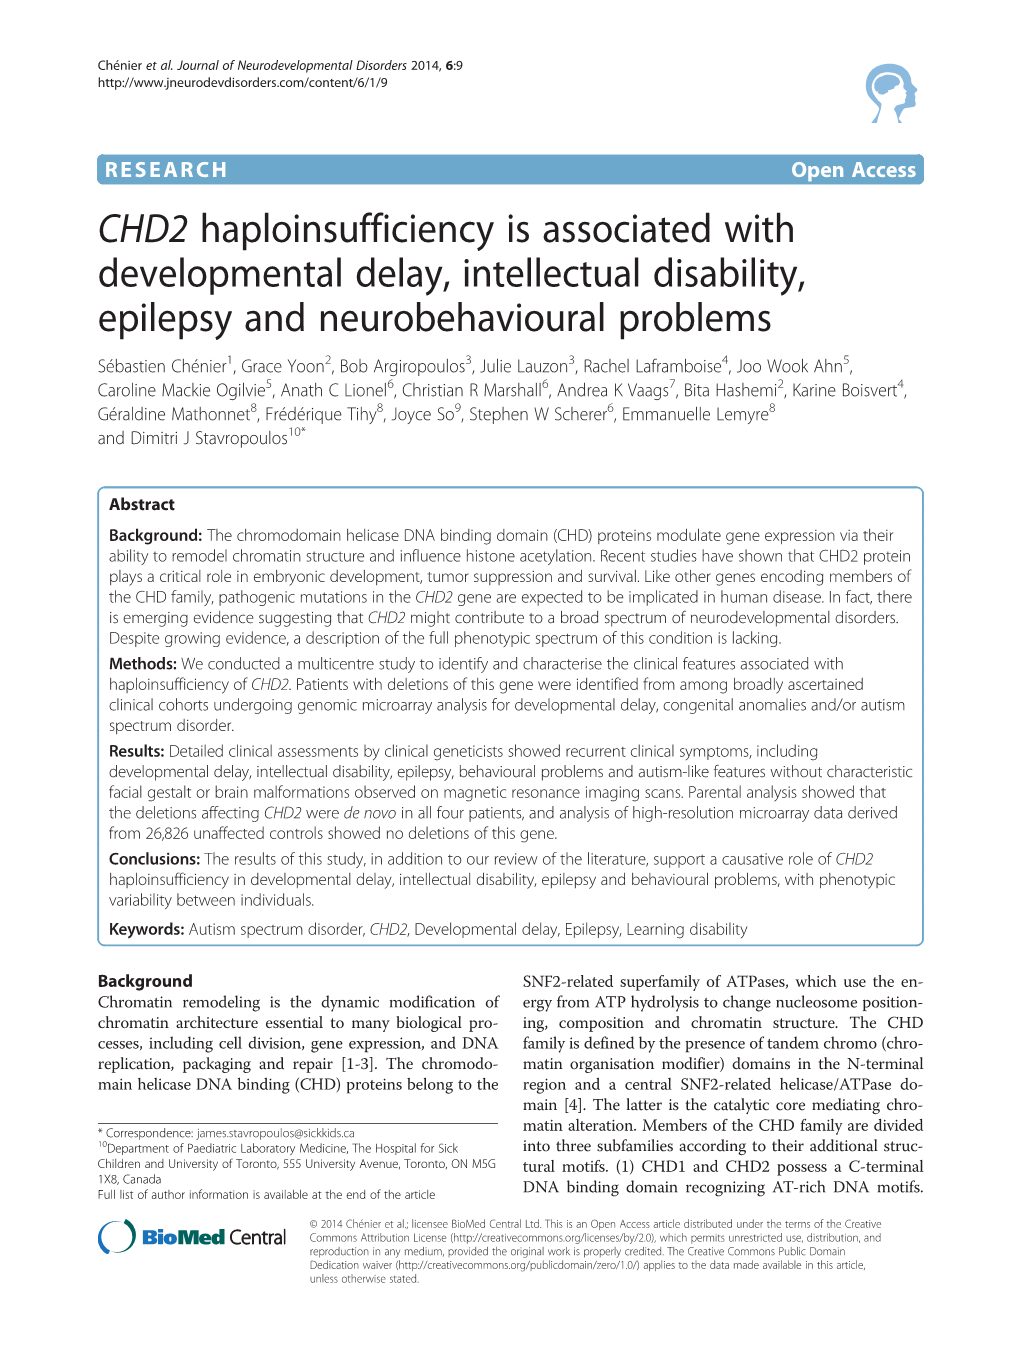 CHD2 Haploinsufficiency Is Associated with Developmental Delay